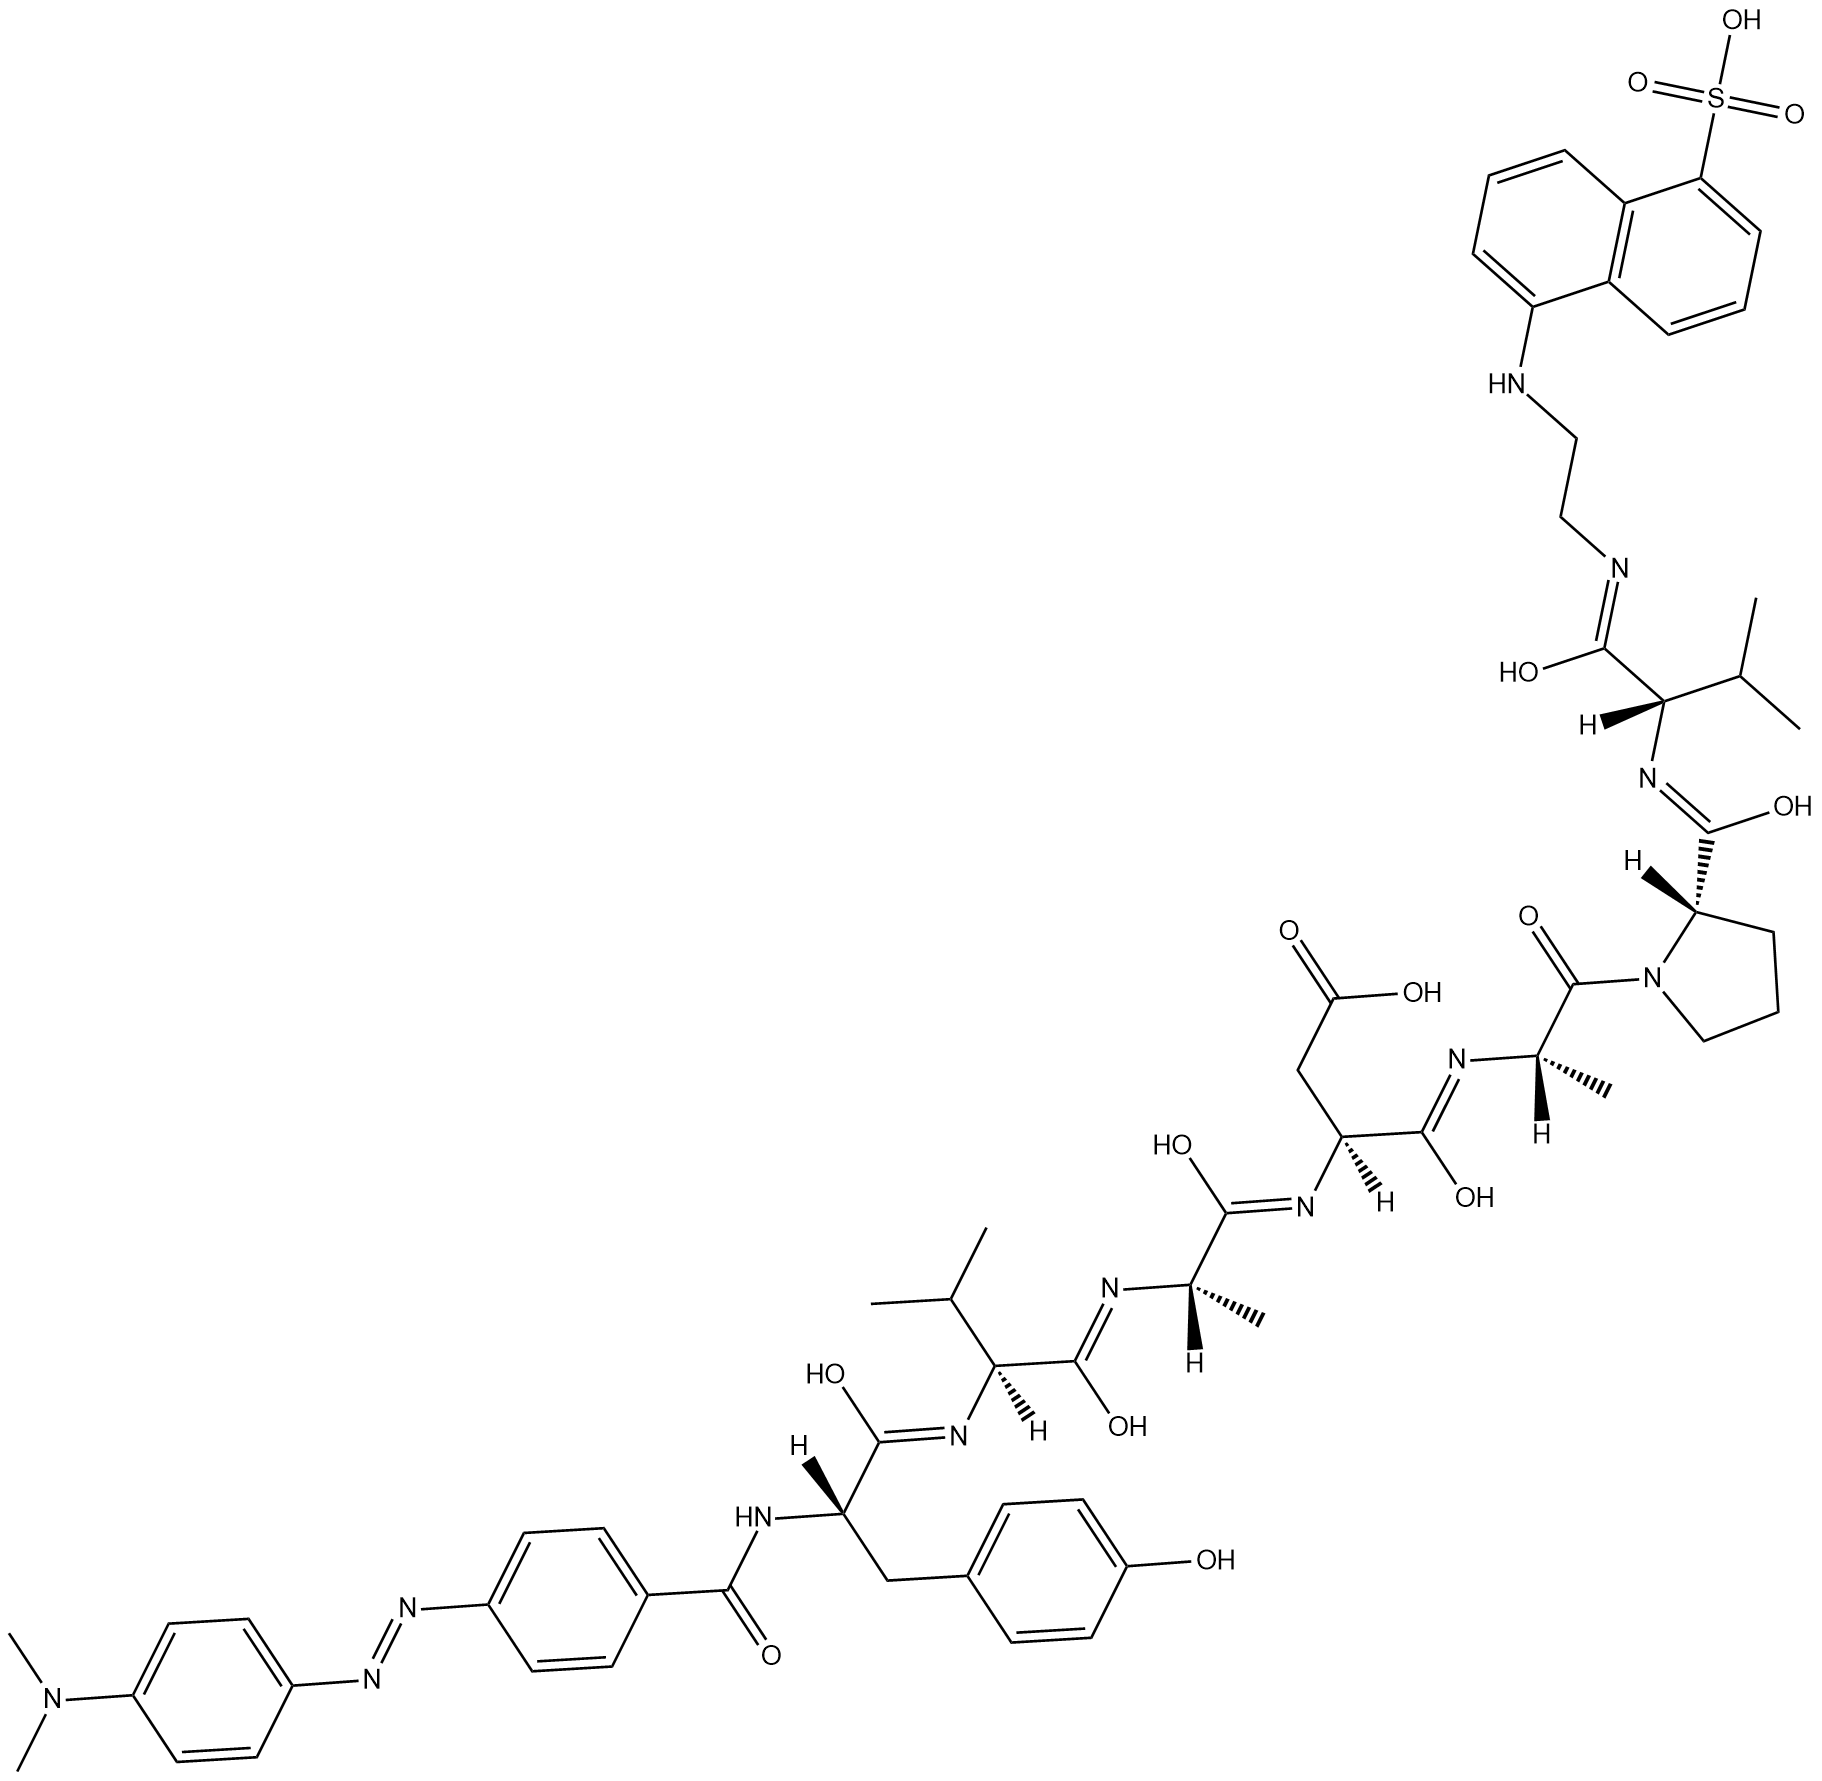 Dabcyl-YVADAPV-EDANS  Chemical Structure